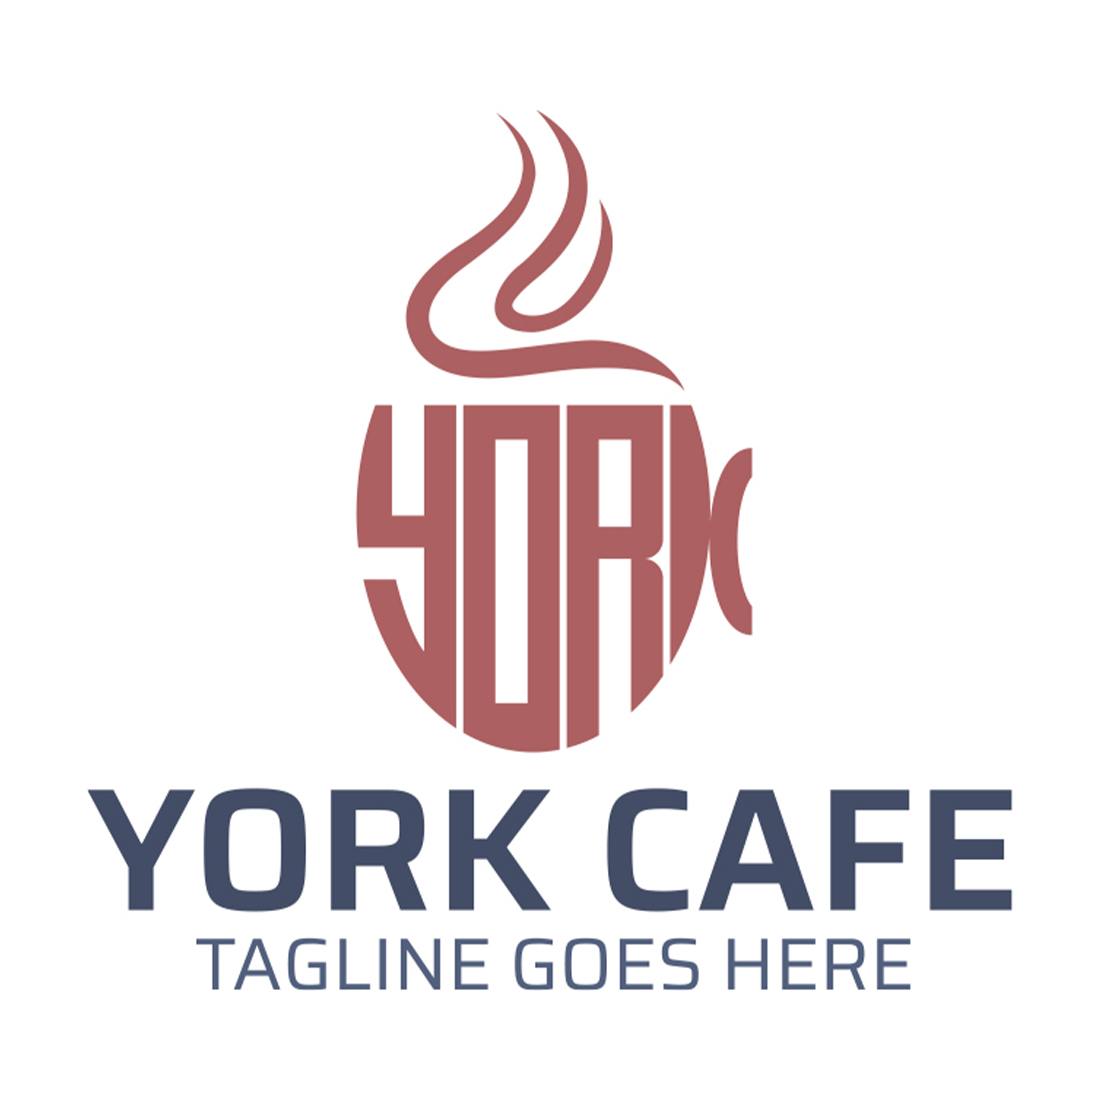 York Cafe Logo Design Template cover image.